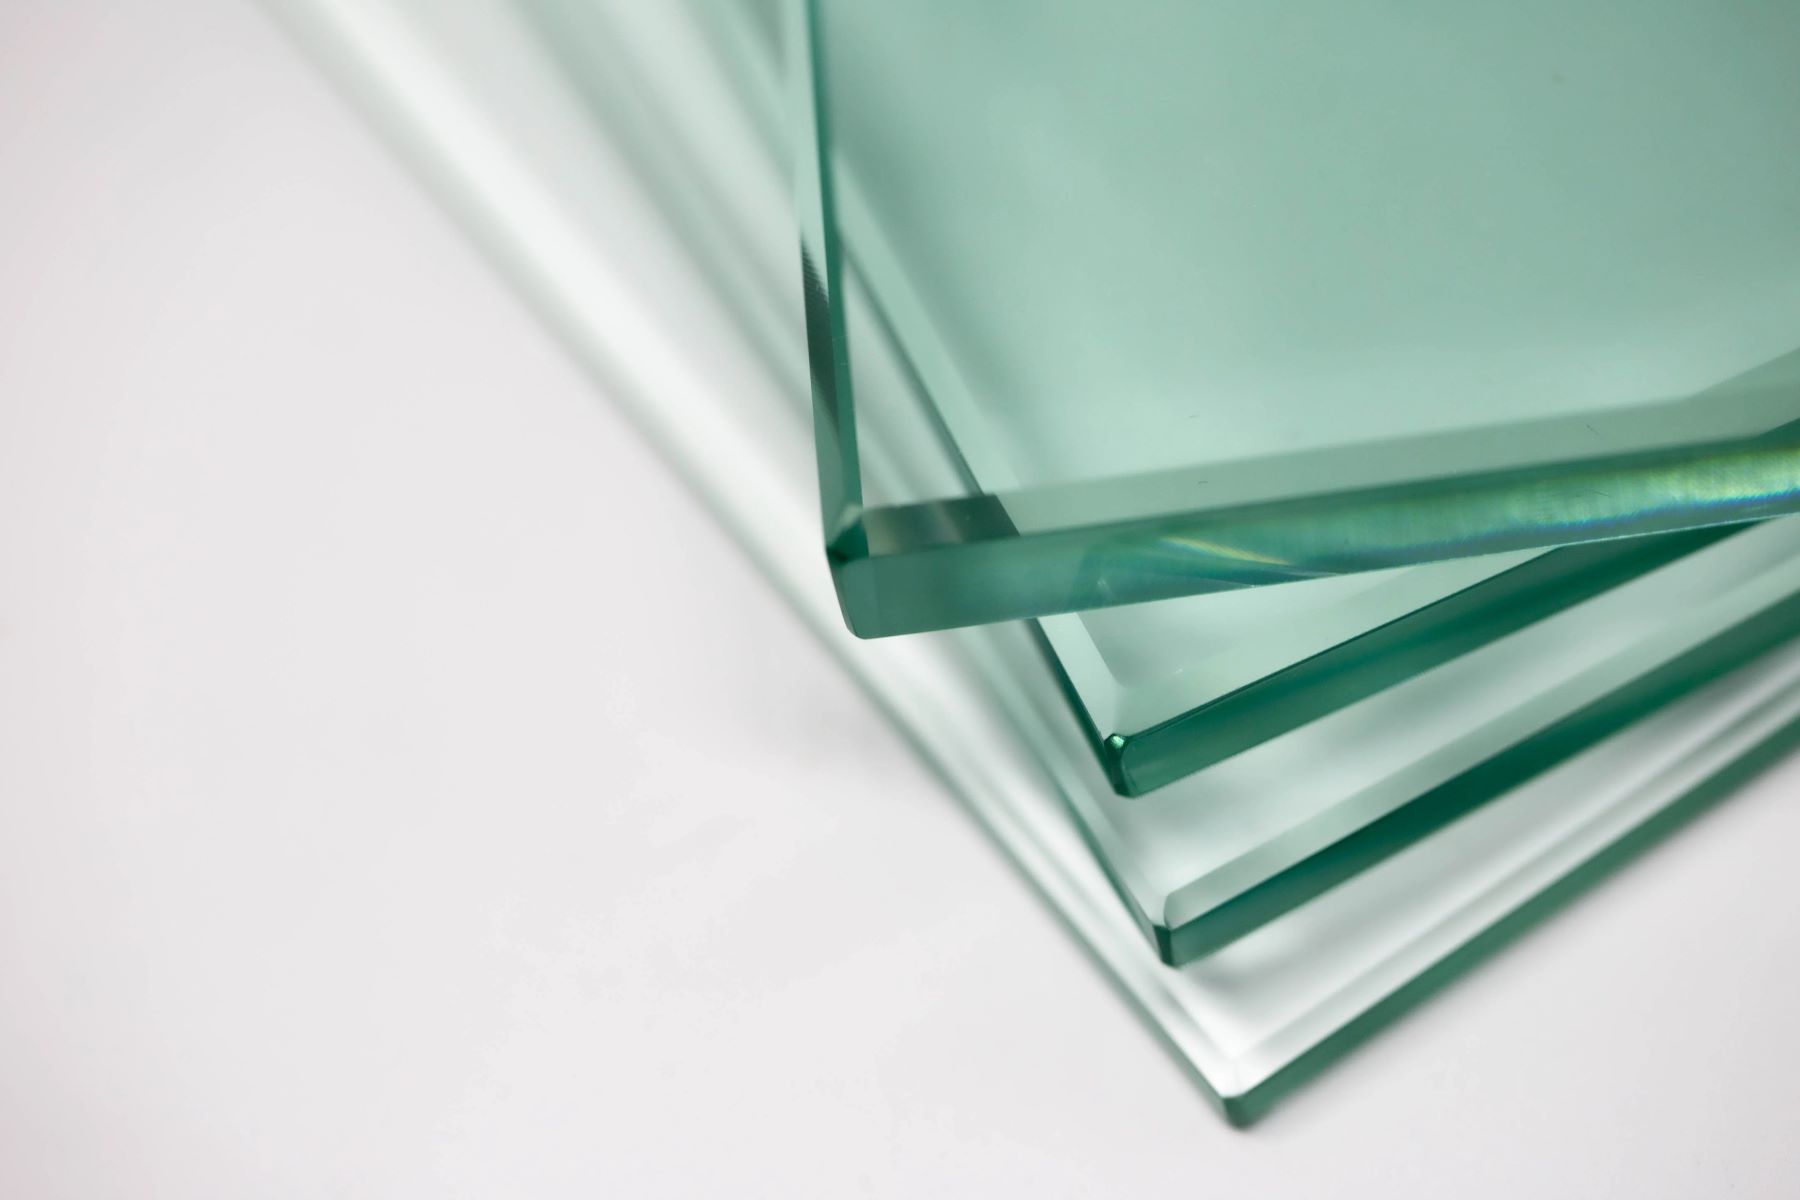 What Grit Sandpaper For Glass Edge